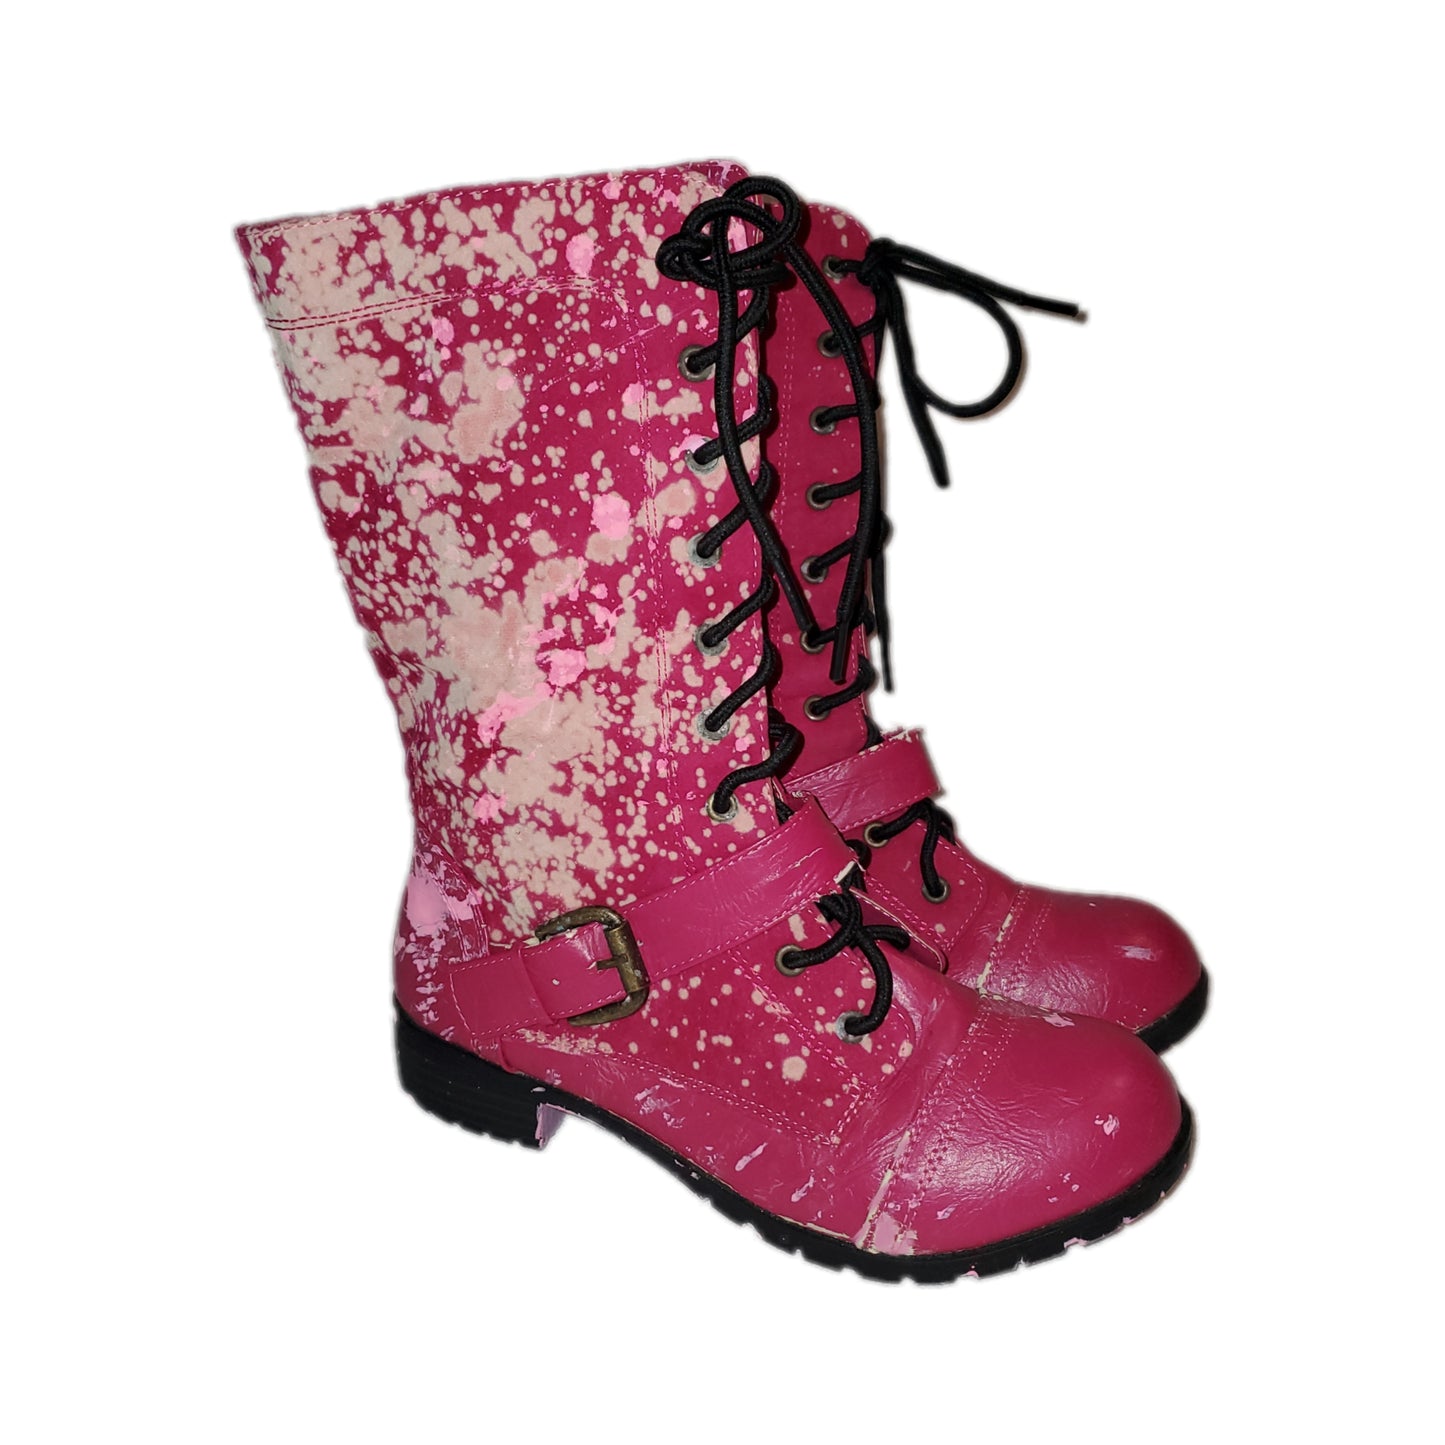 "Pinkie" Boots